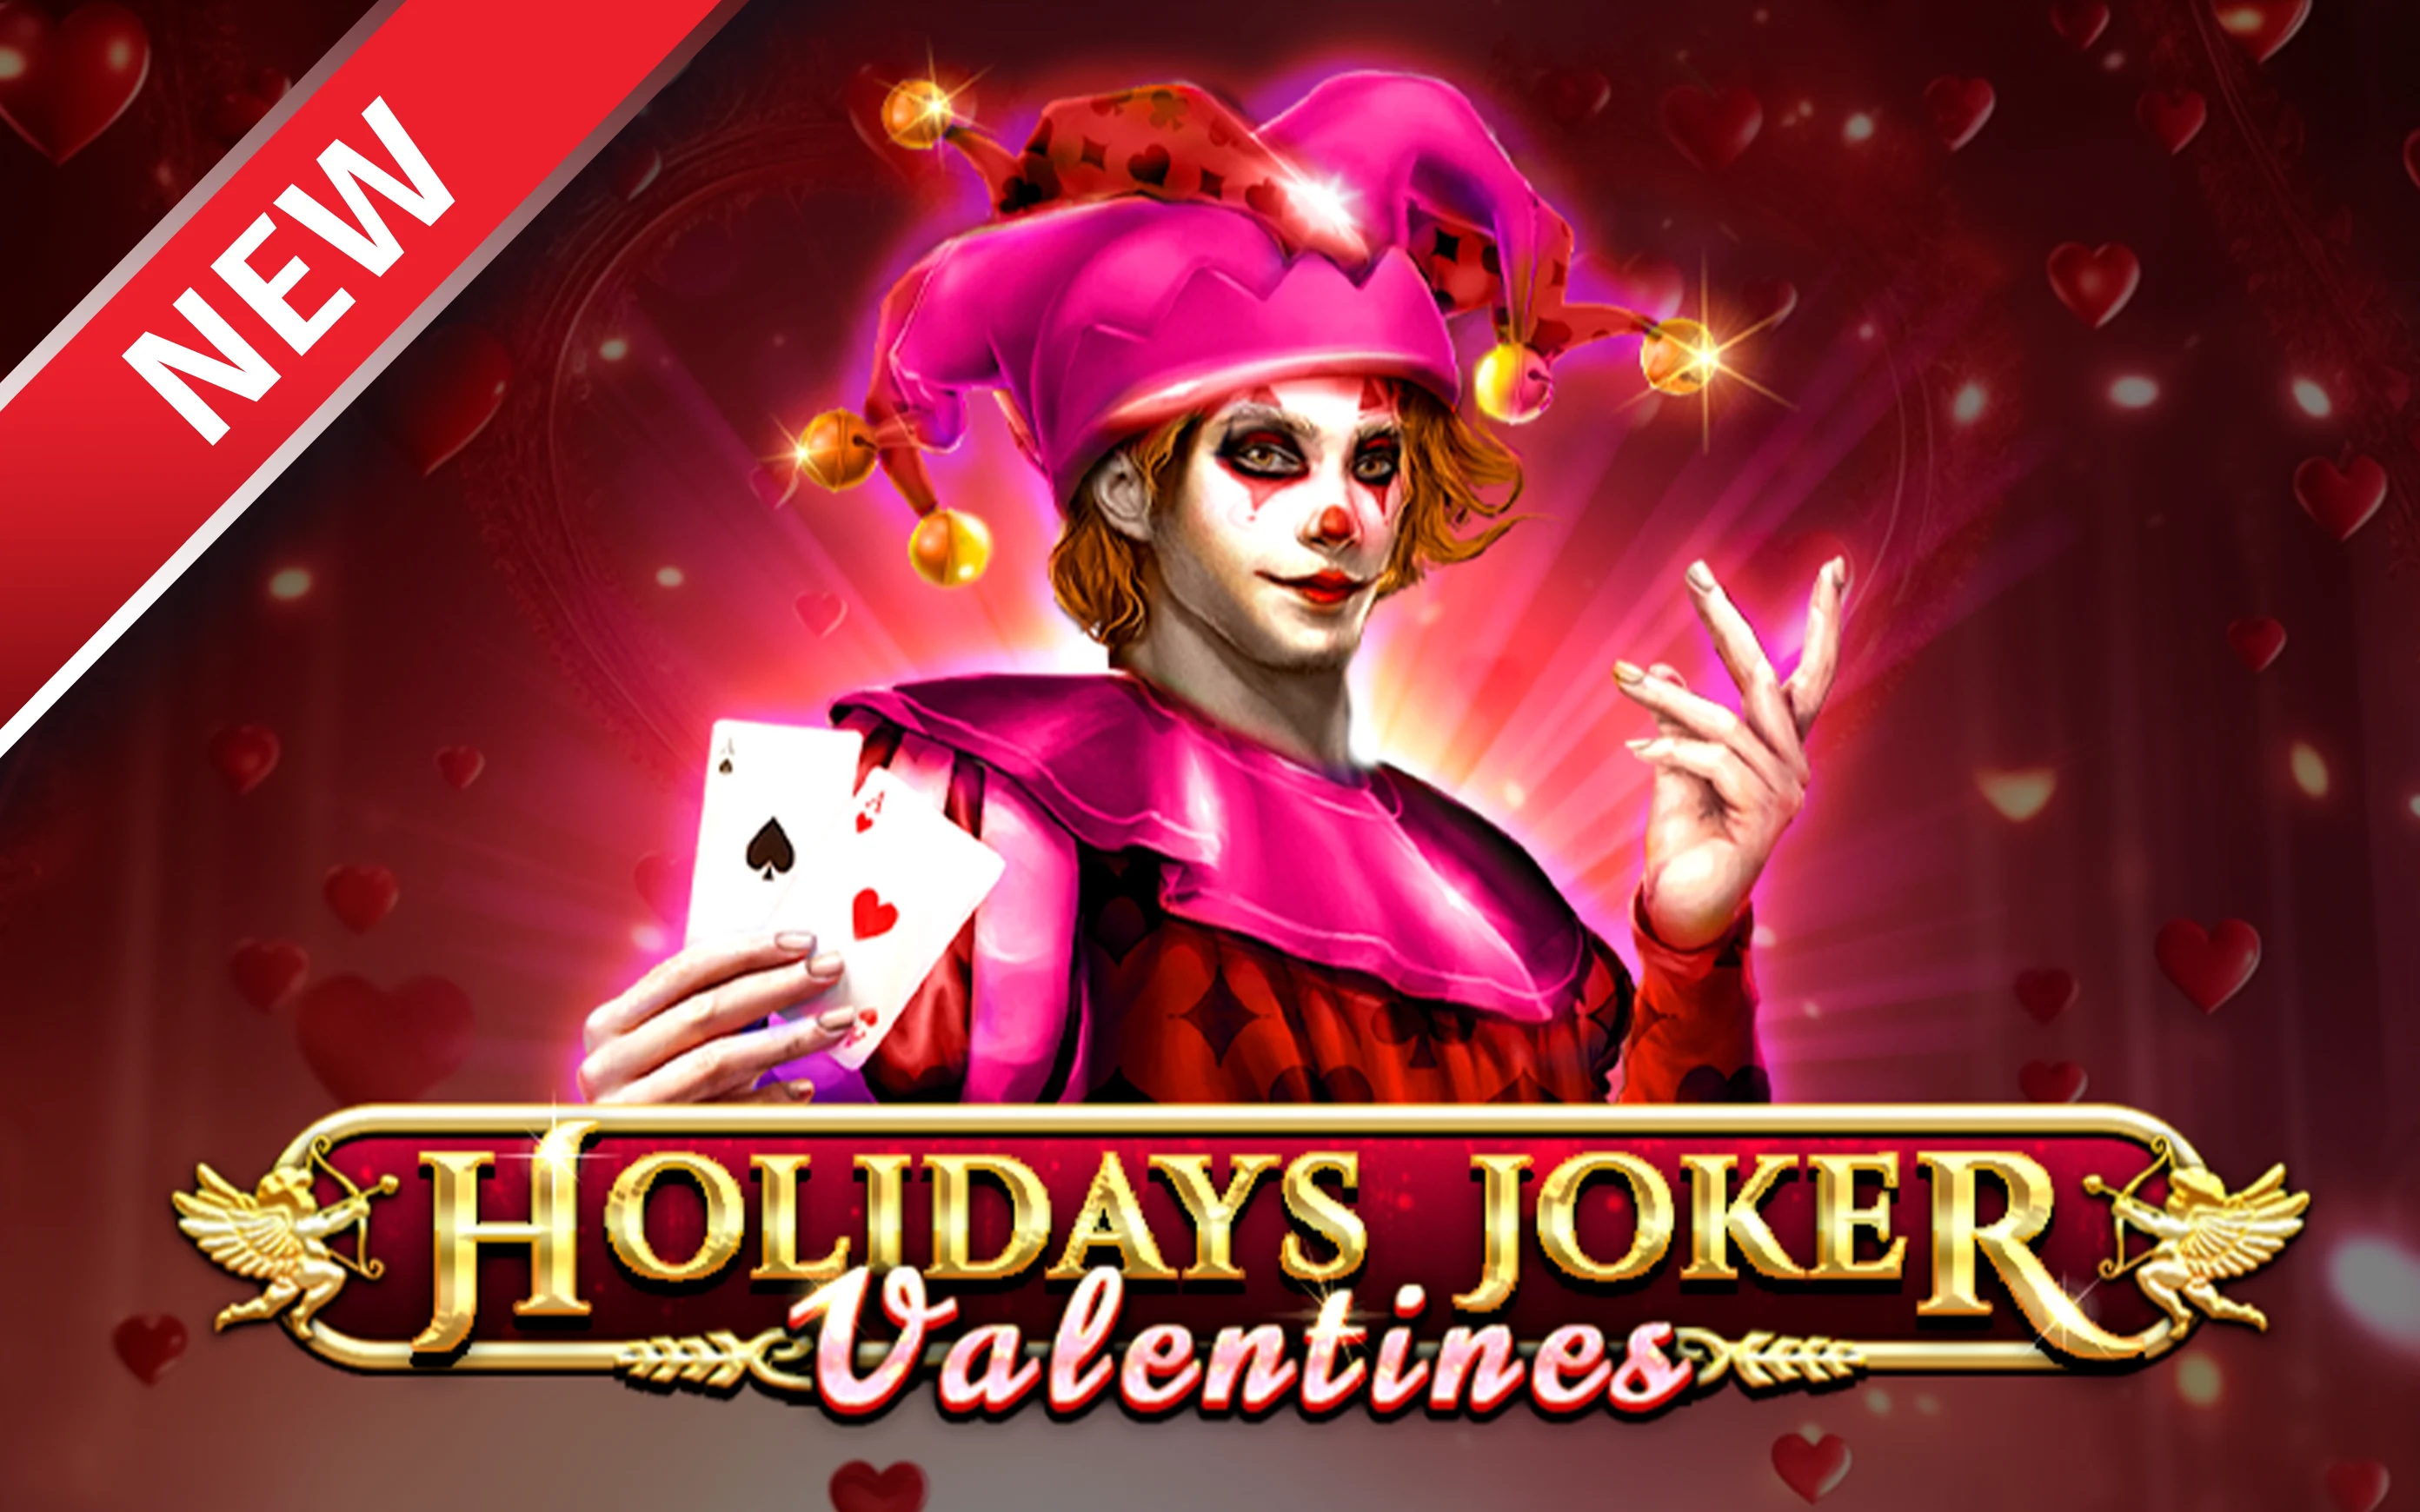 Play Holidays Joker - Valentines™ on Starcasino.be online casino